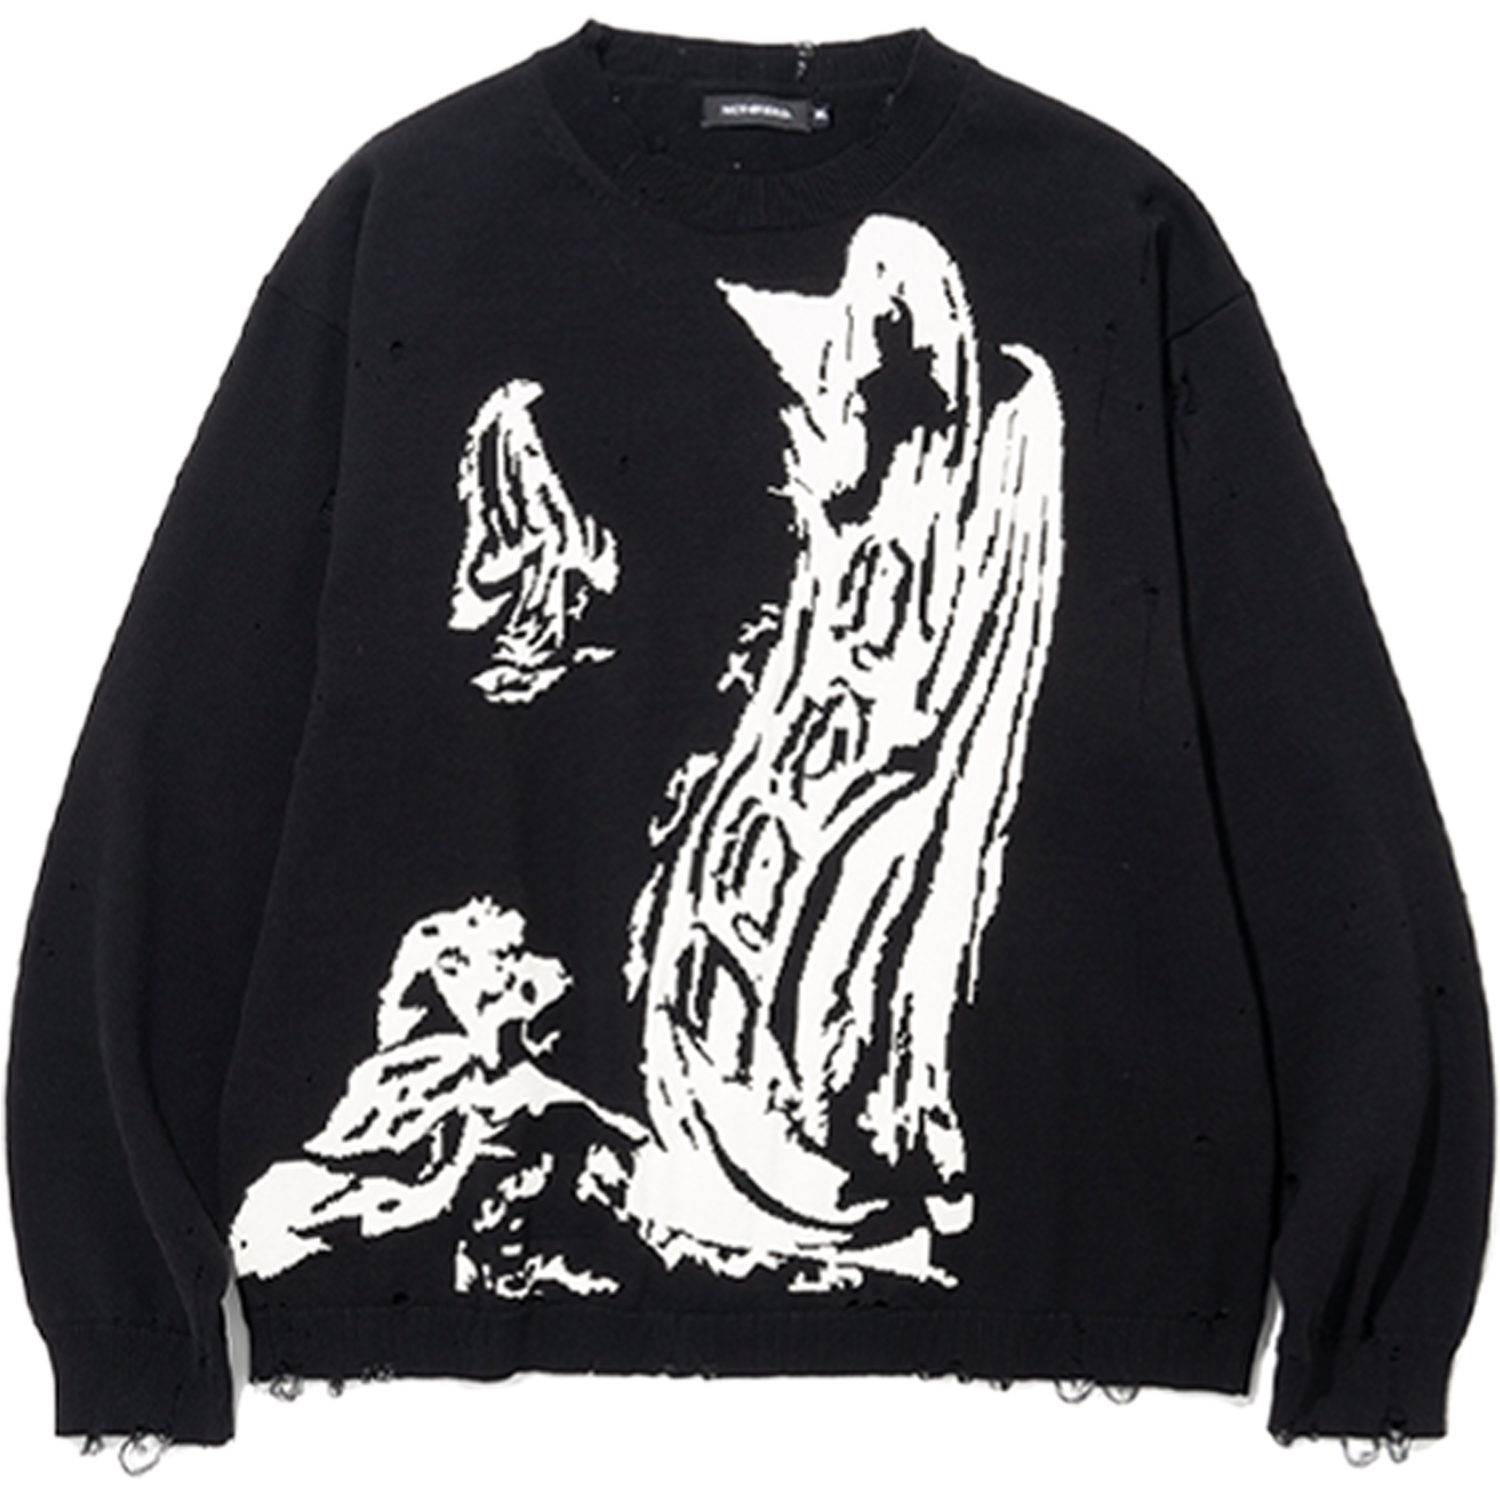 Pilgrimage Knit Sweater - Black,NOT4NERD